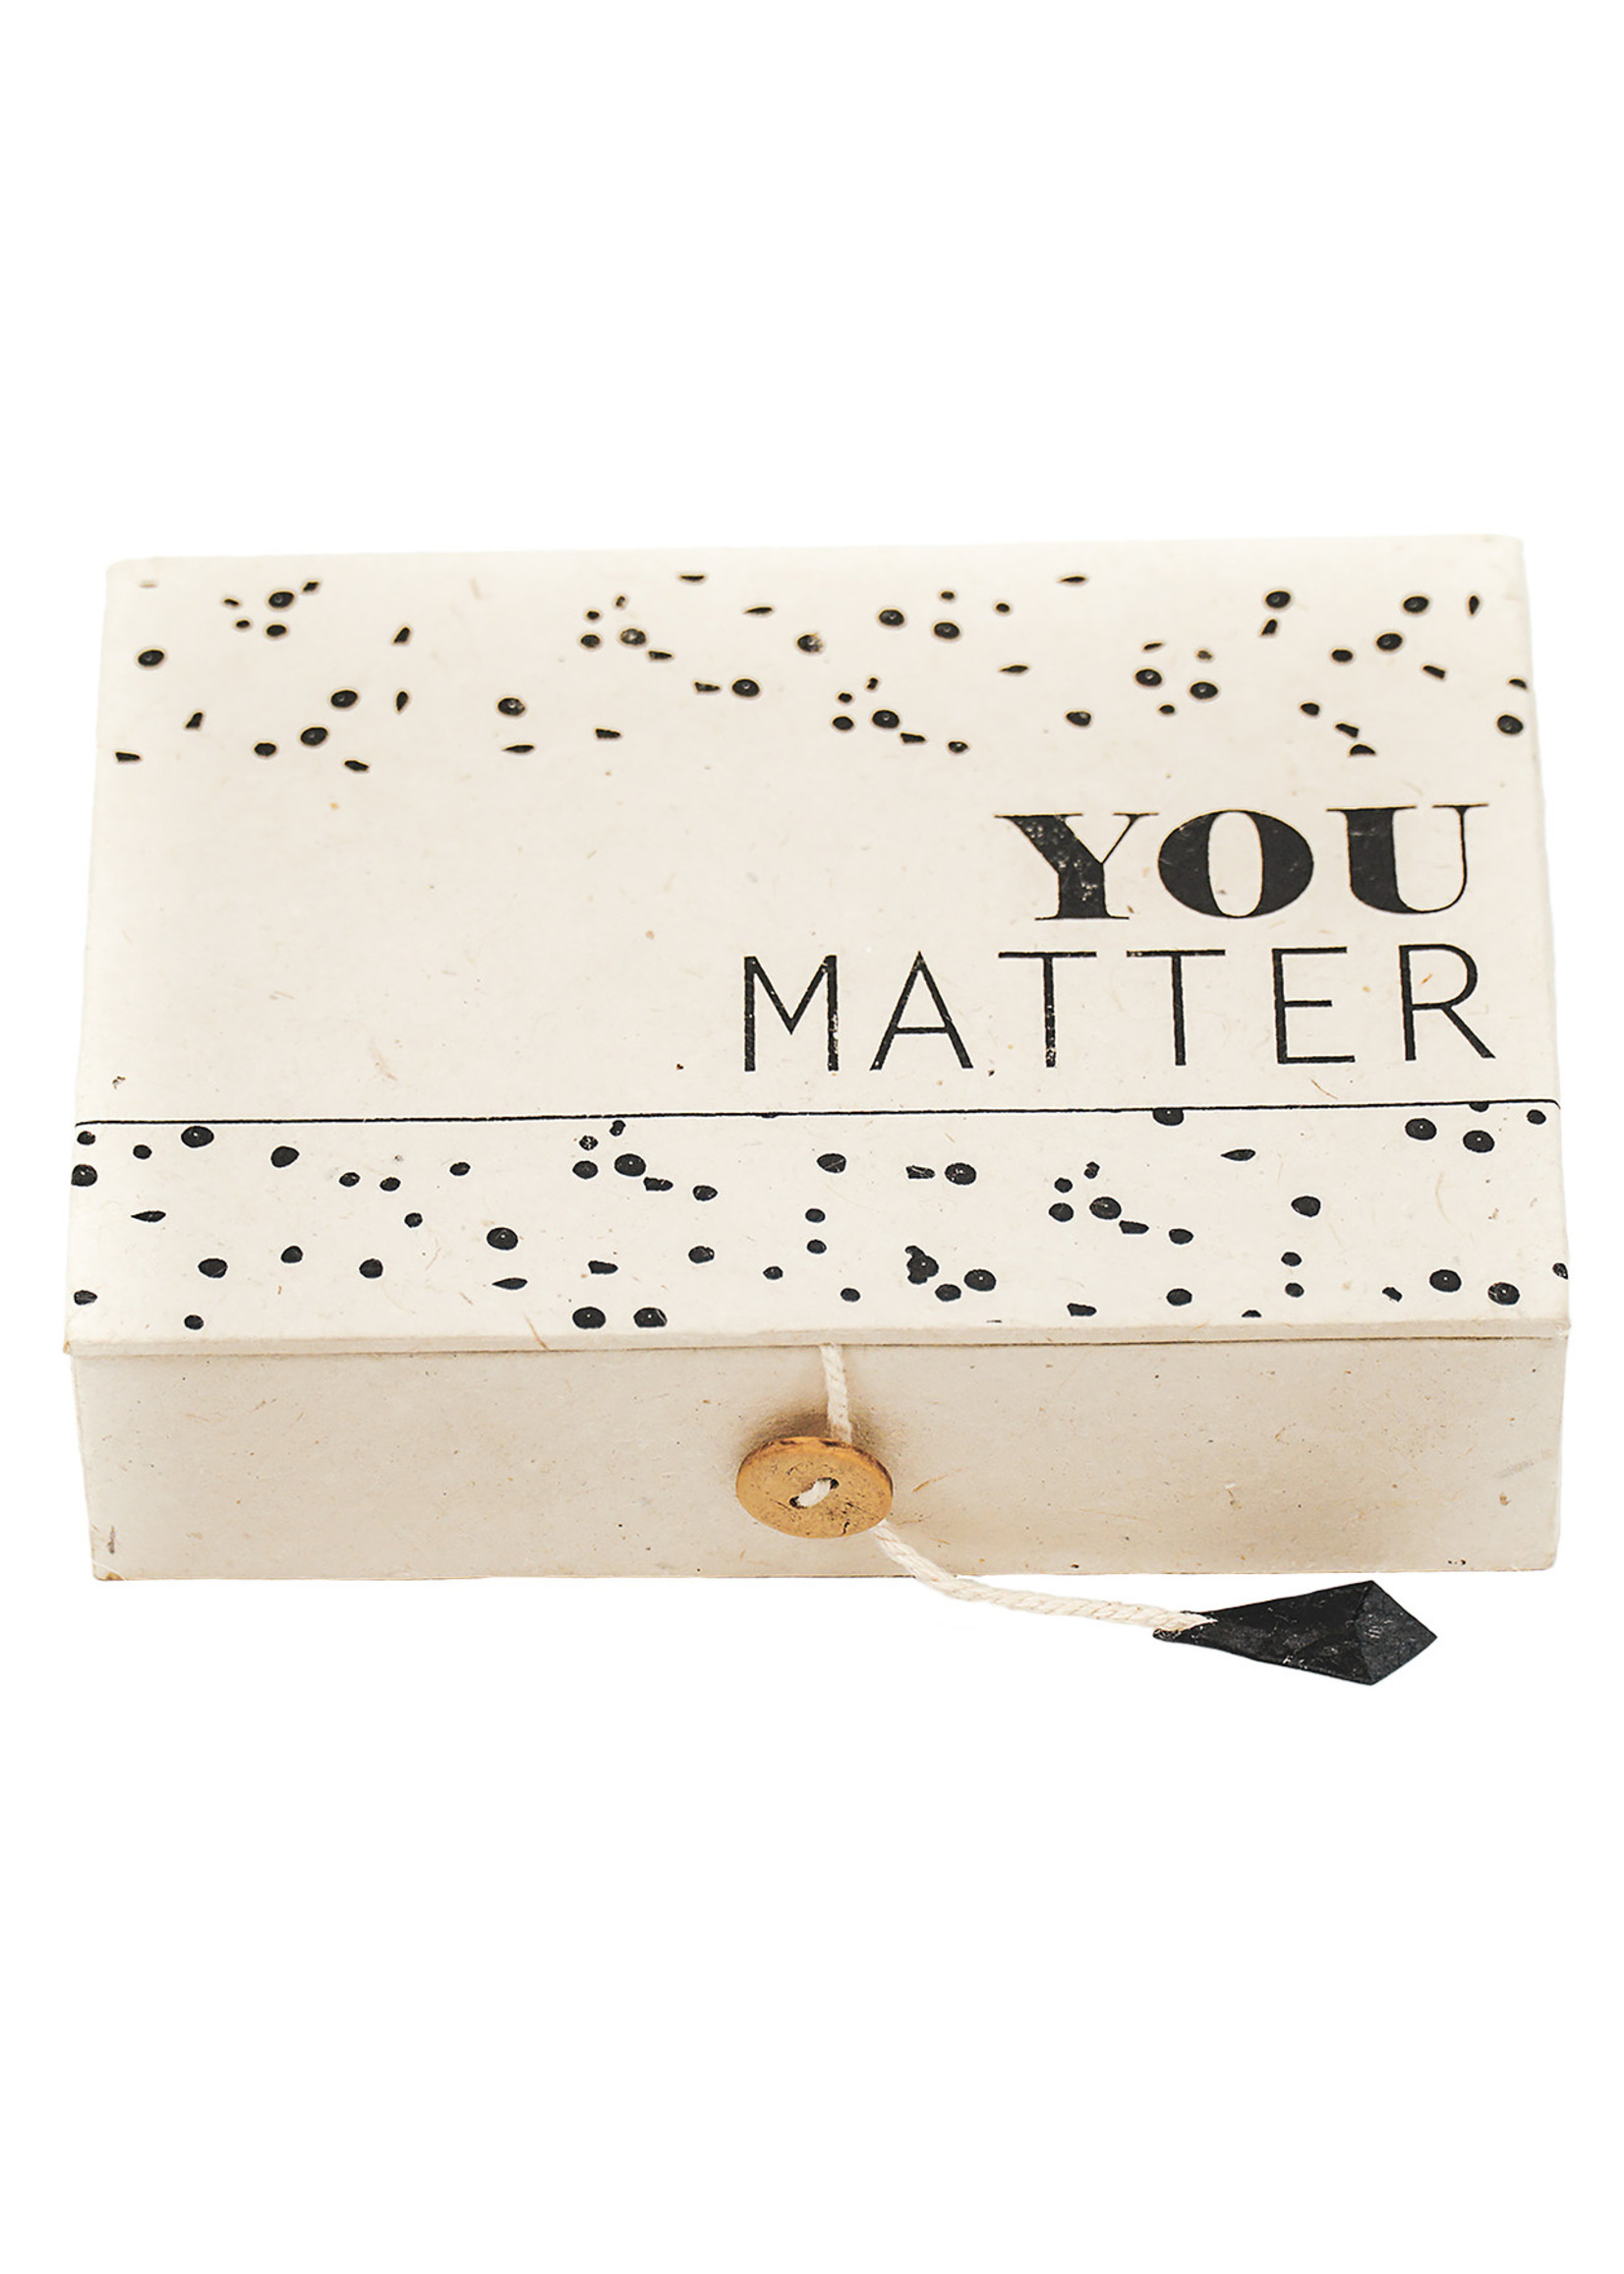 Return To Sender "You Matter" box